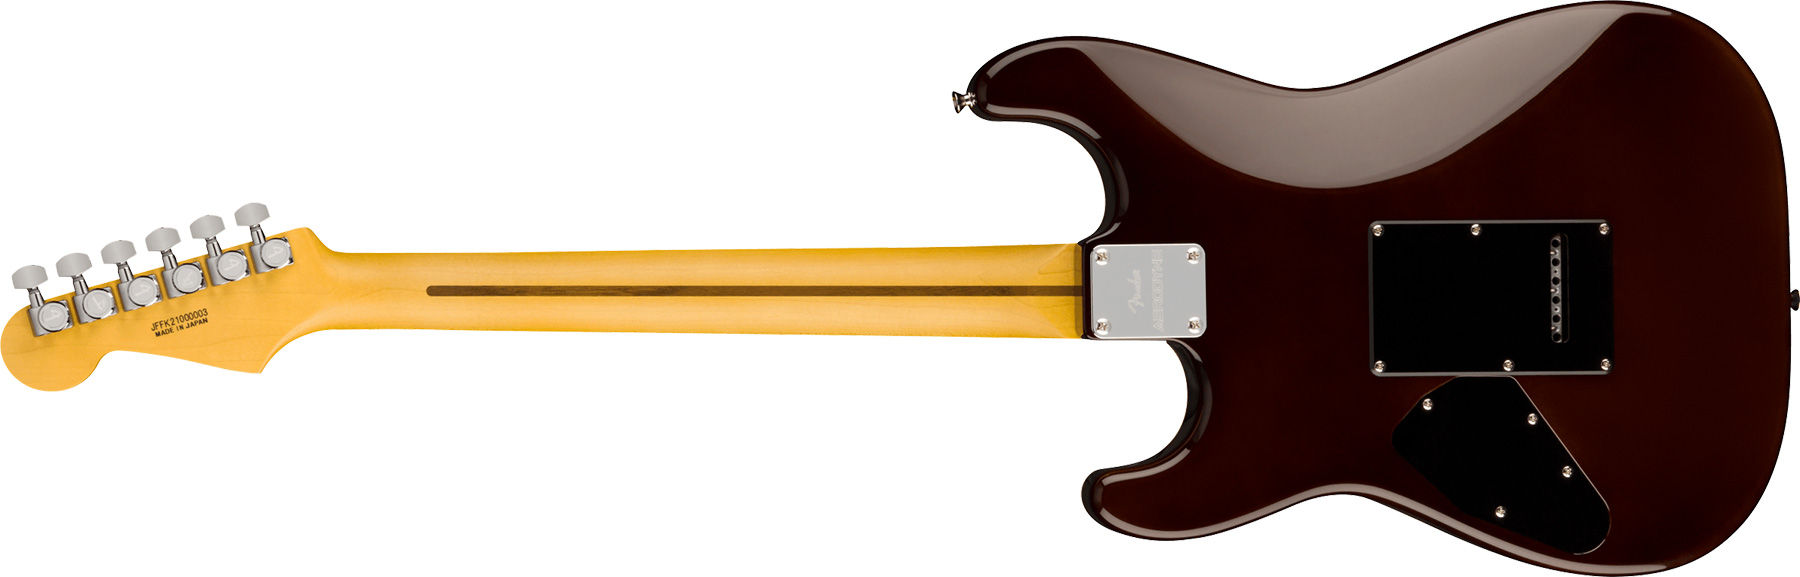 Fender Strat Aerodyne Special Jap 3s Trem Rw - Chocolate Burst - Guitare Électrique Forme Str - Variation 1